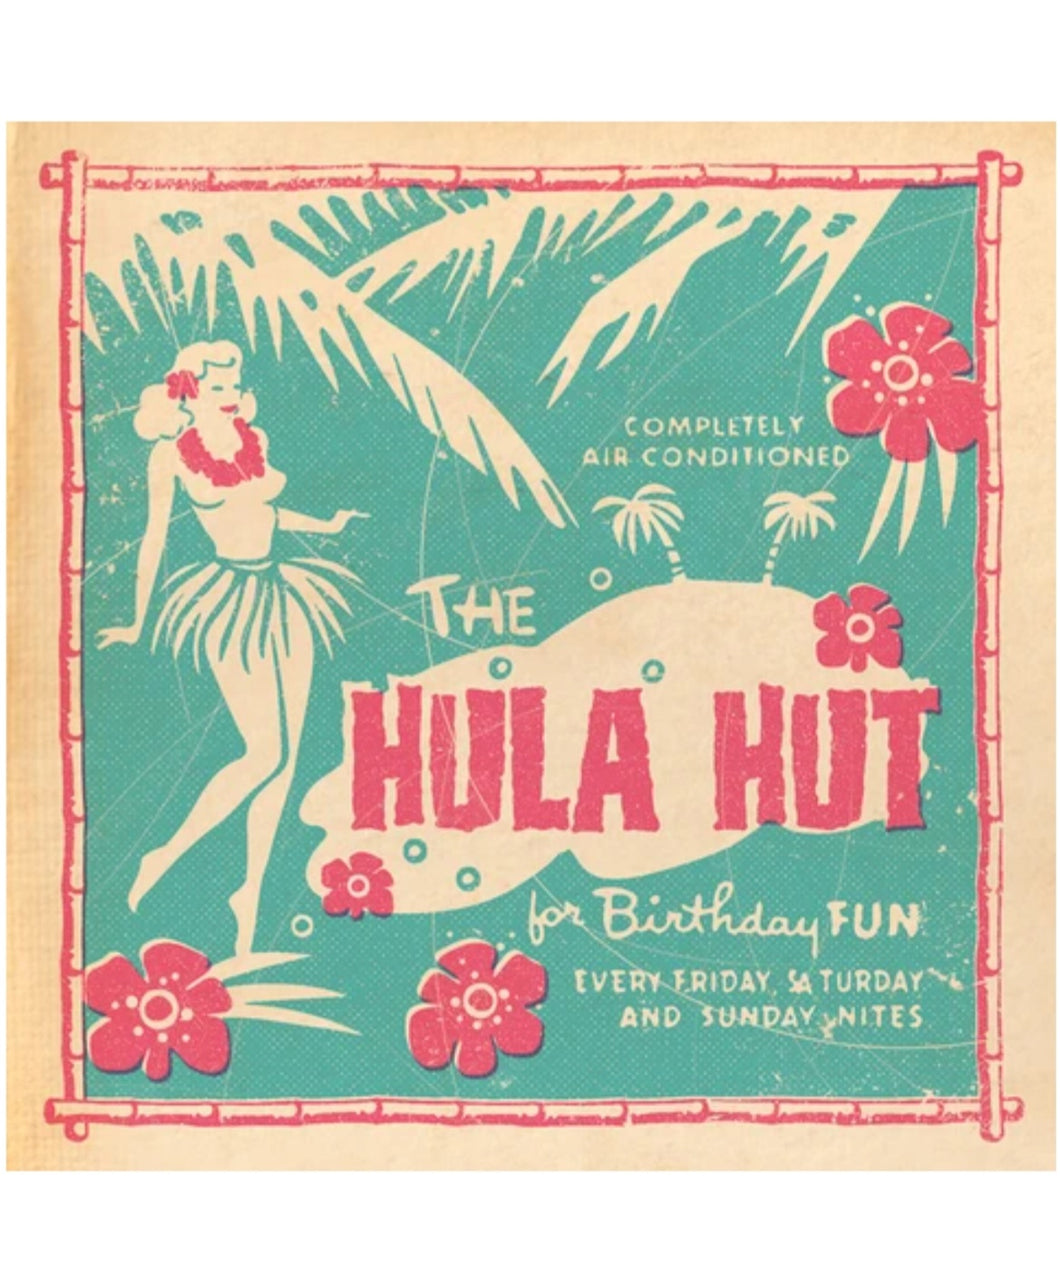 Hula Hut Vintage Matchbook Cover Greetings Card